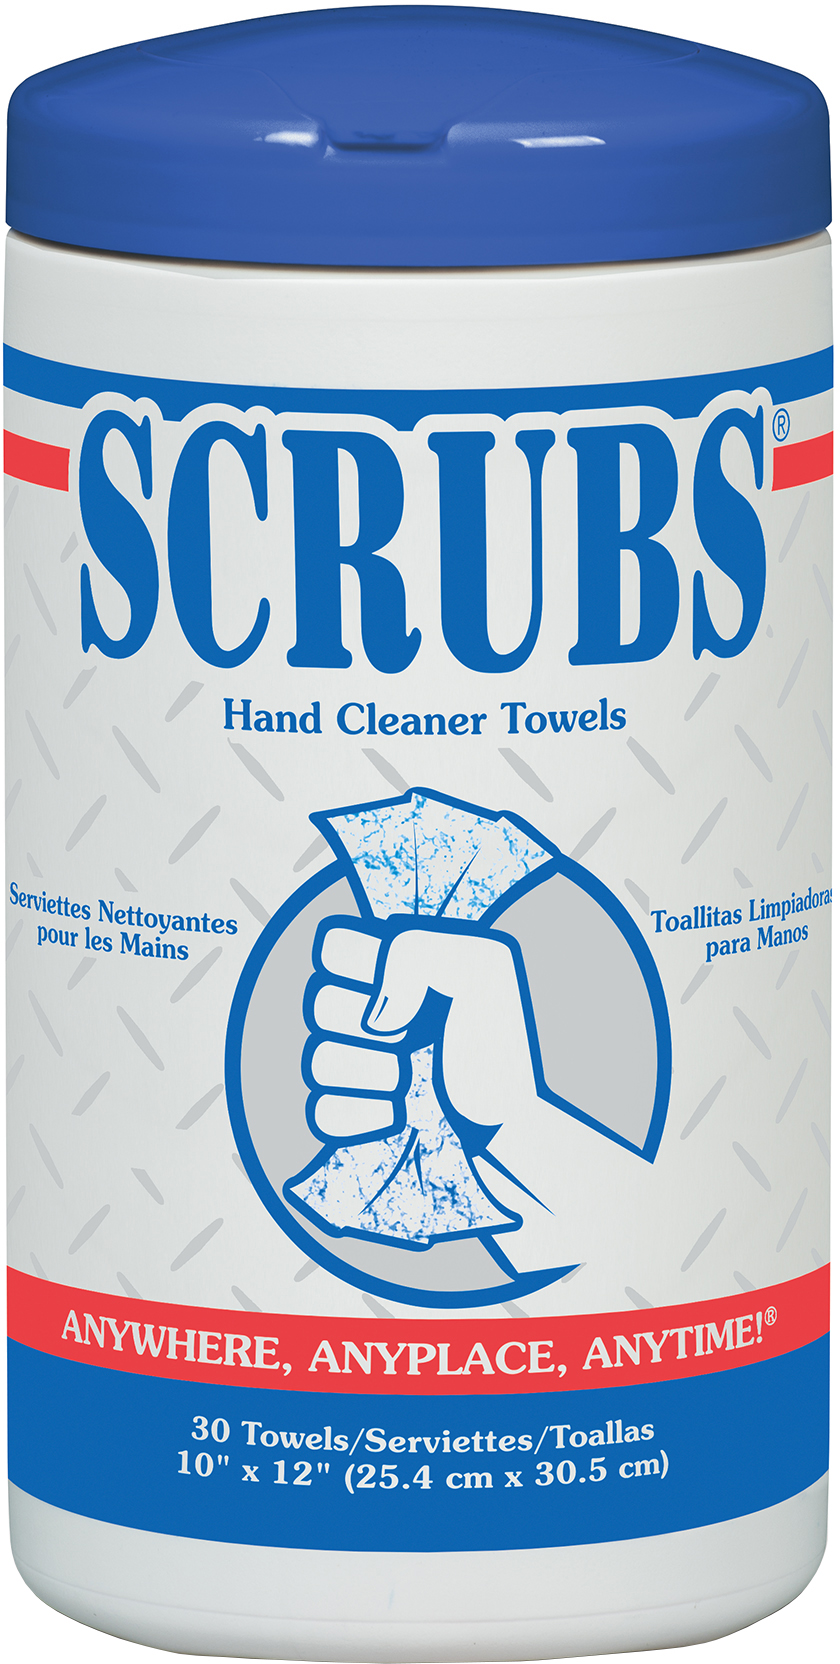 Gemplers Waterless Hand Cleaner Towels